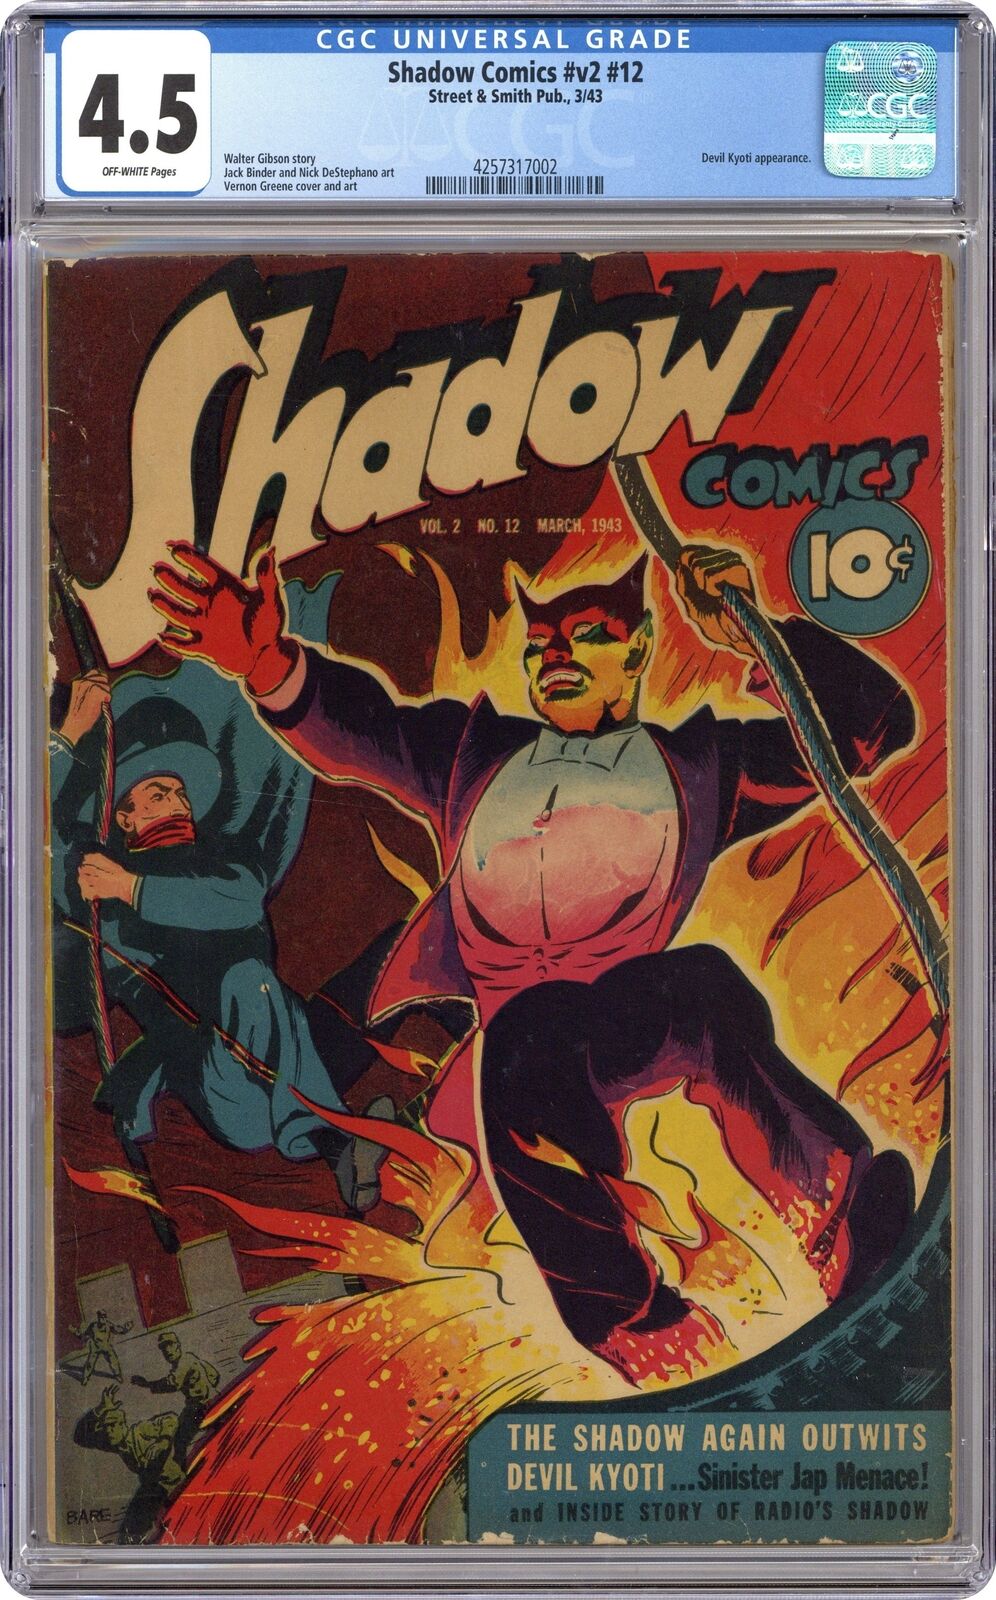 Shadow Comics Vol. 2 #12 CGC 4.5 1943 4257317002